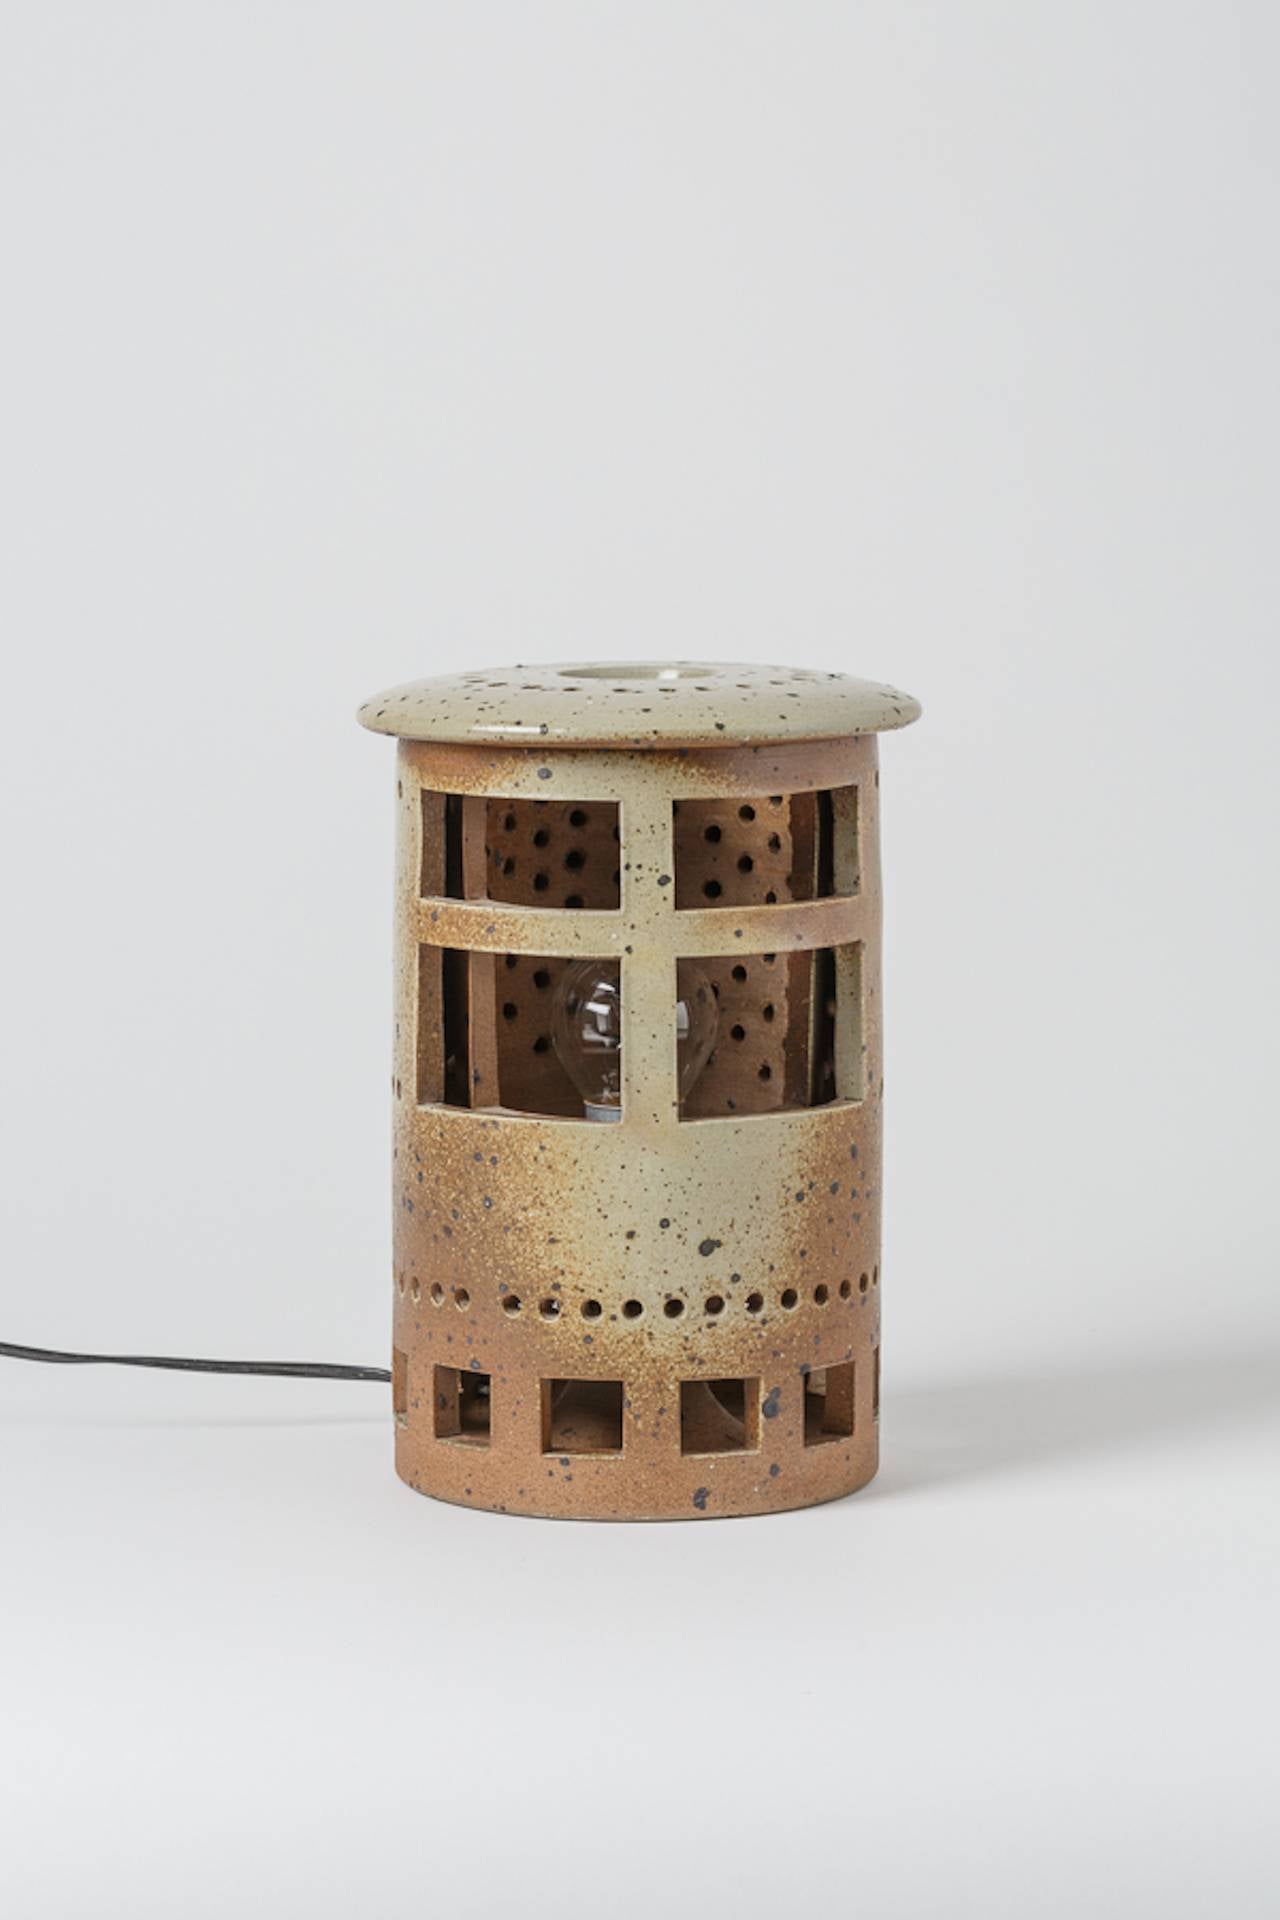 An exceptionnal ceramic lamp by Robert Deblander, Saint-Amand-en-Puisaye.
Artist monogramm at the base.
Circa 1960-1970.